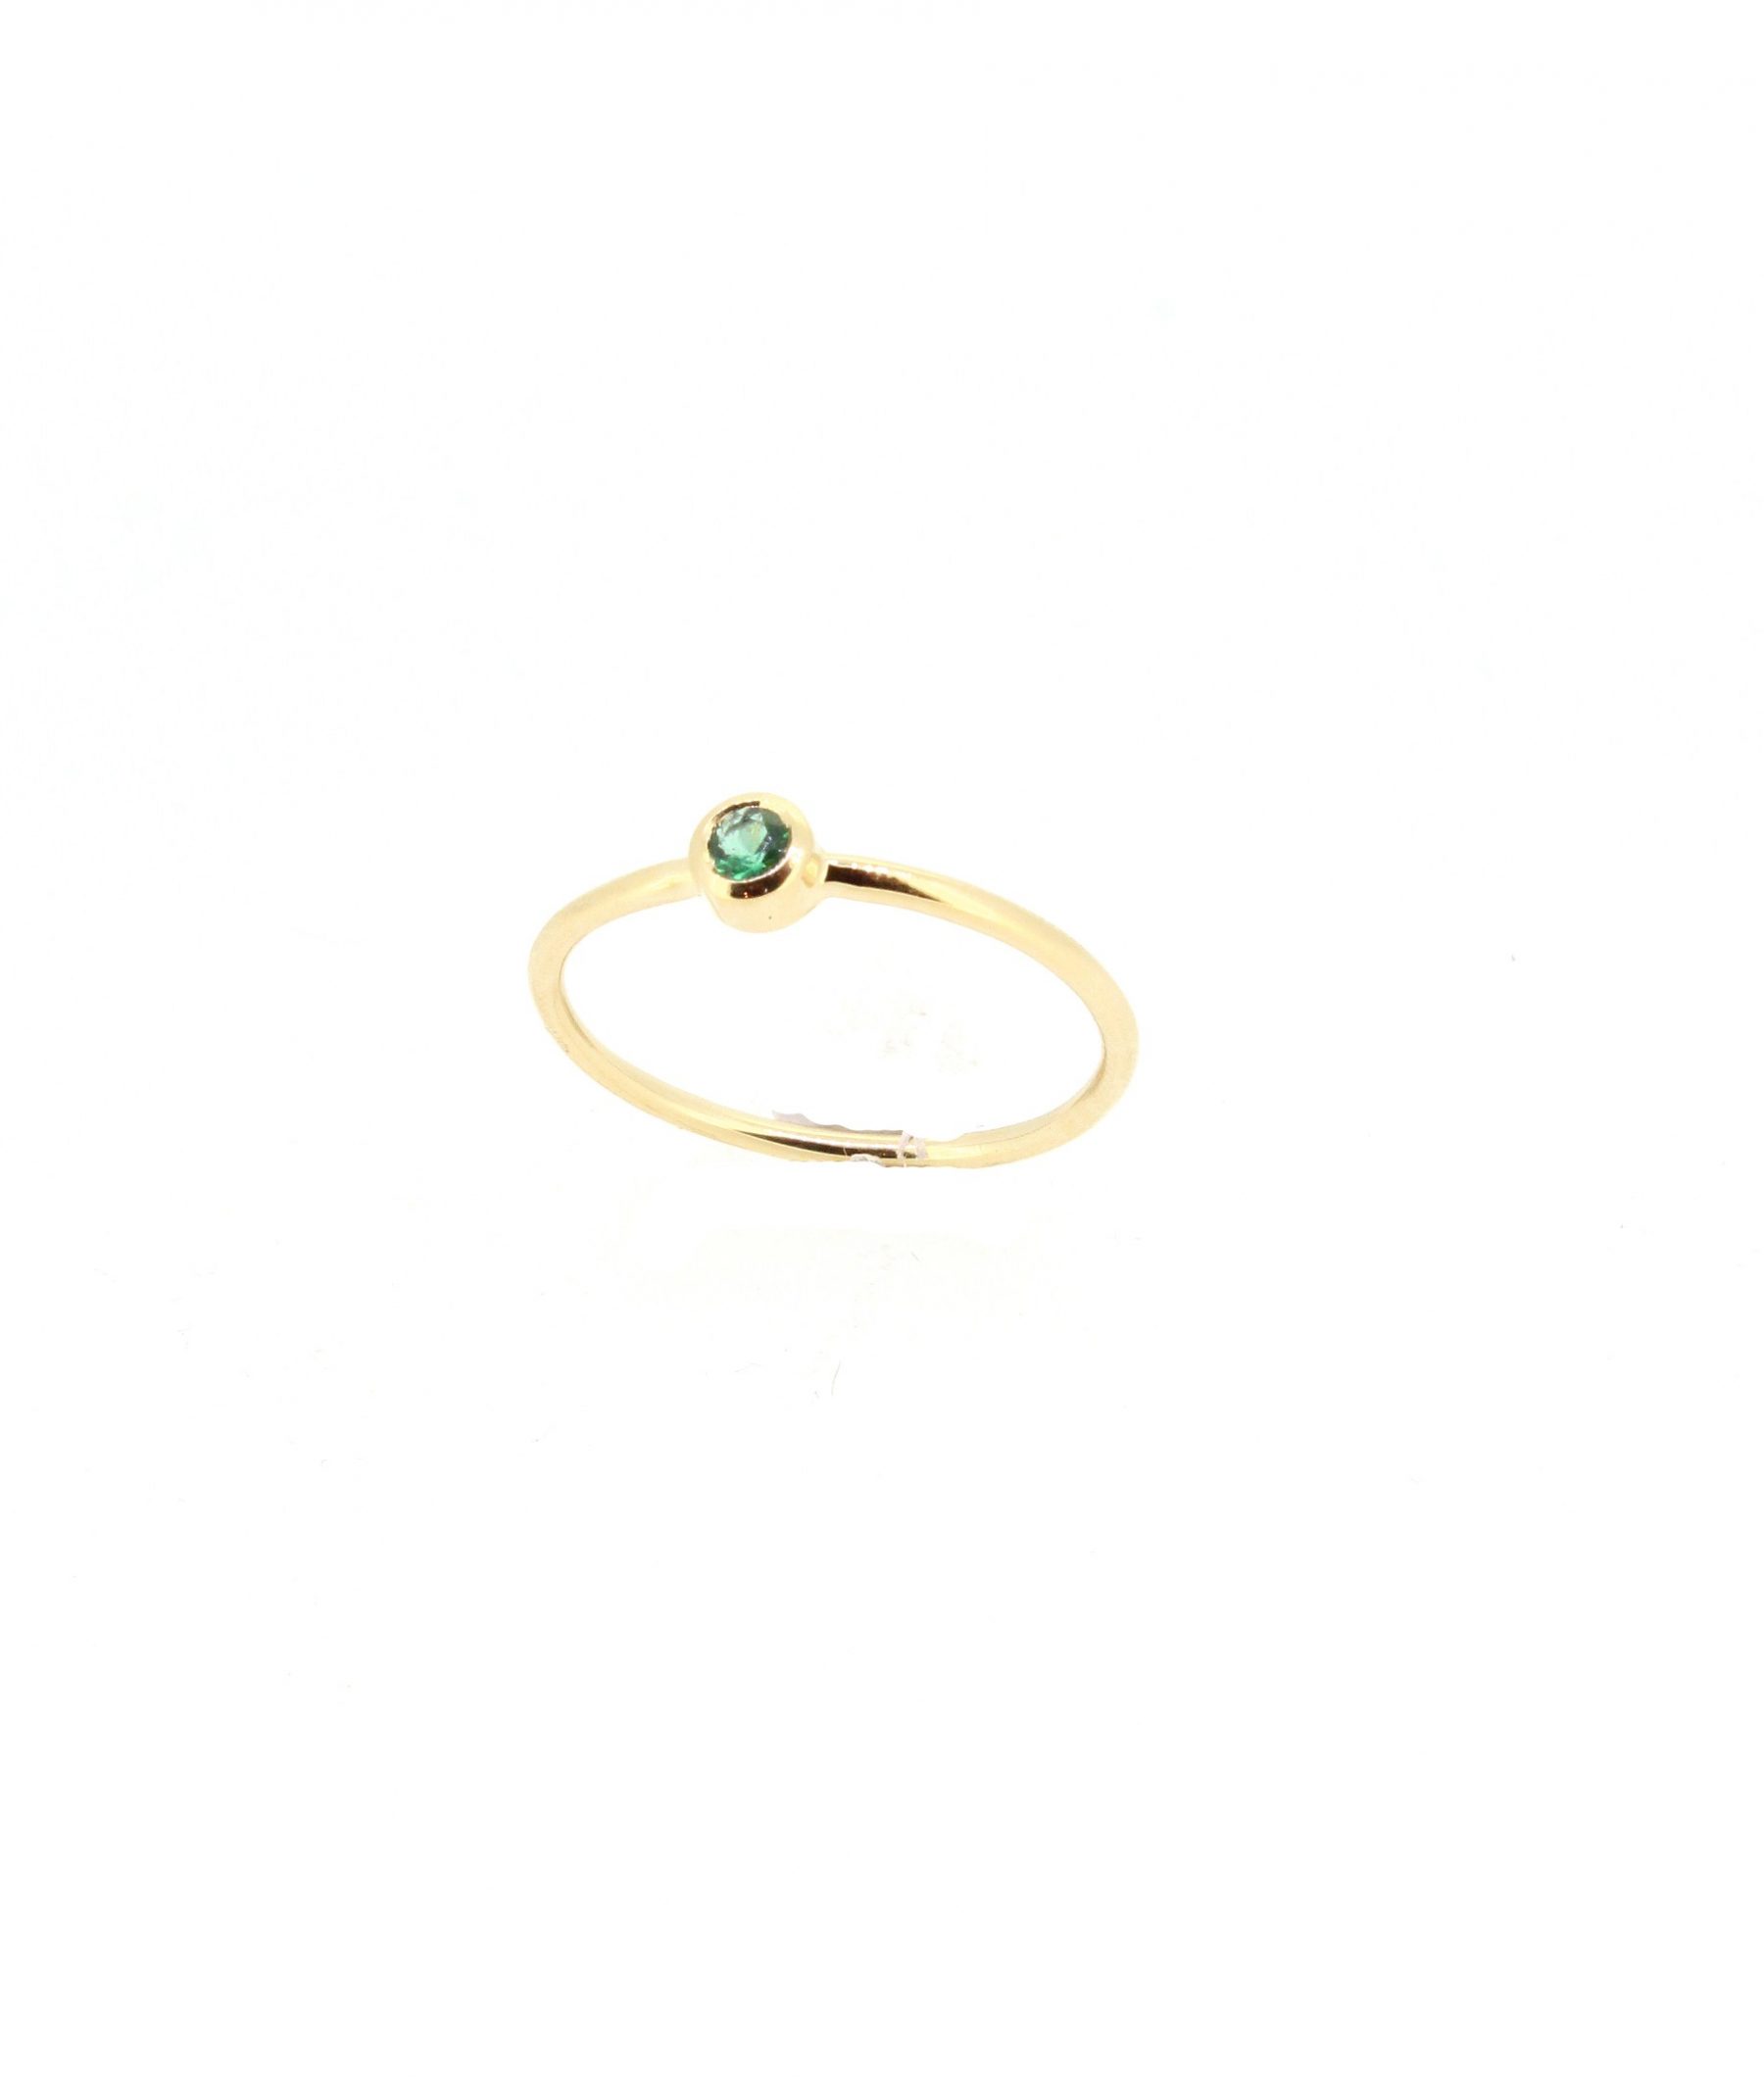 Ring Smaragd 18ct Gold - Lefteris Margaritis - RG0030eme